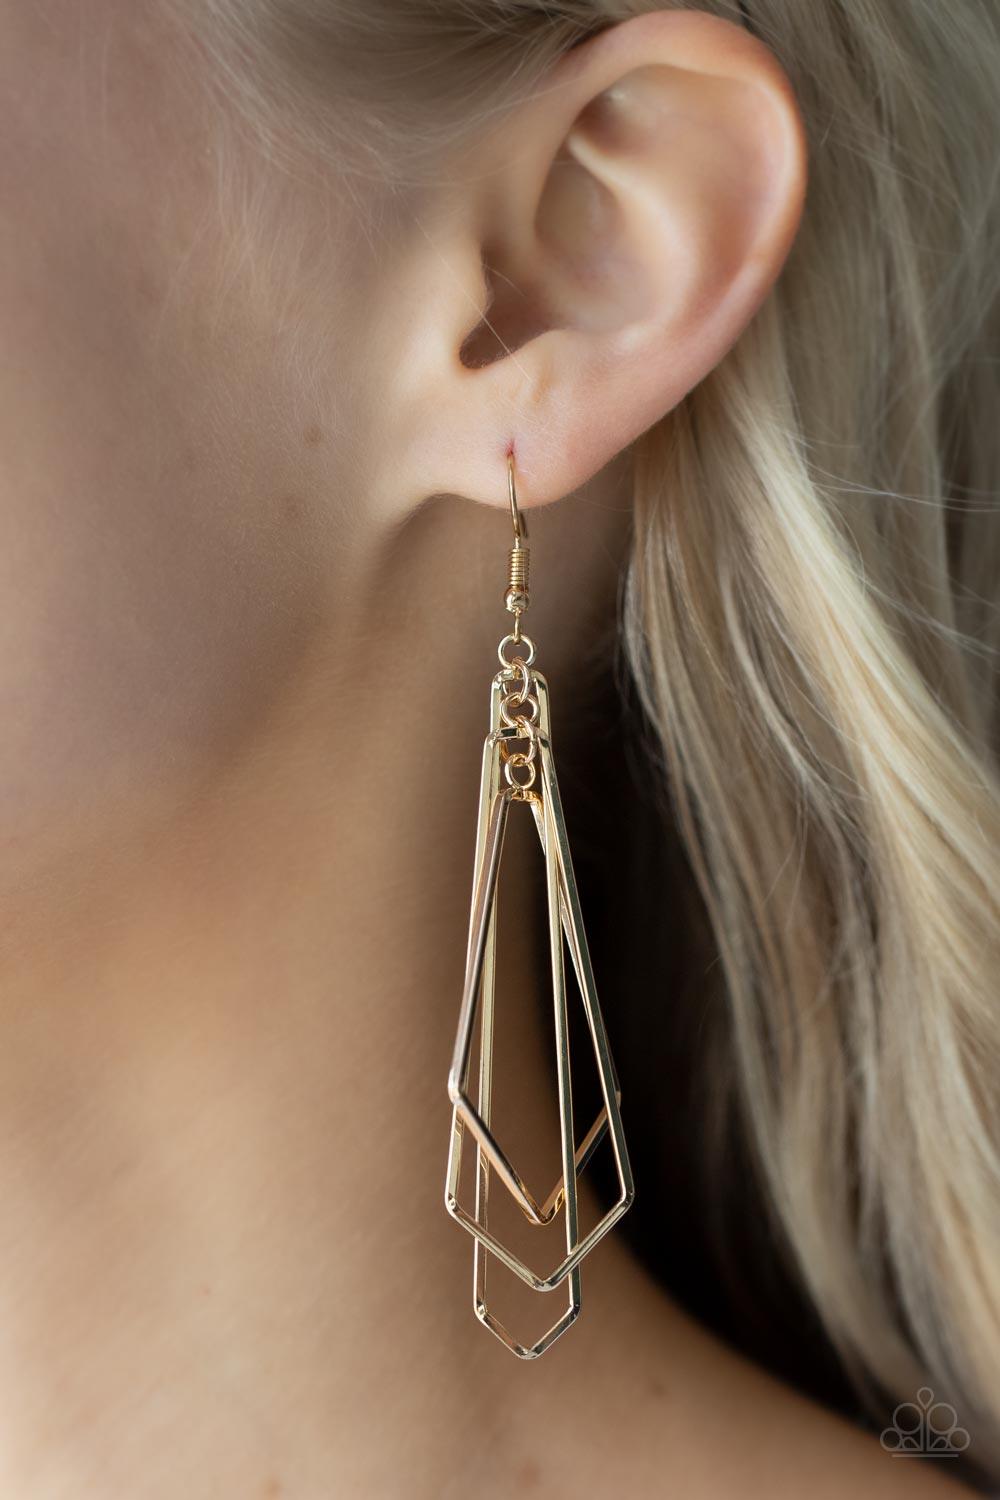 Shape Shifting Shimmer Gold Earrings - Jewelry by Bretta